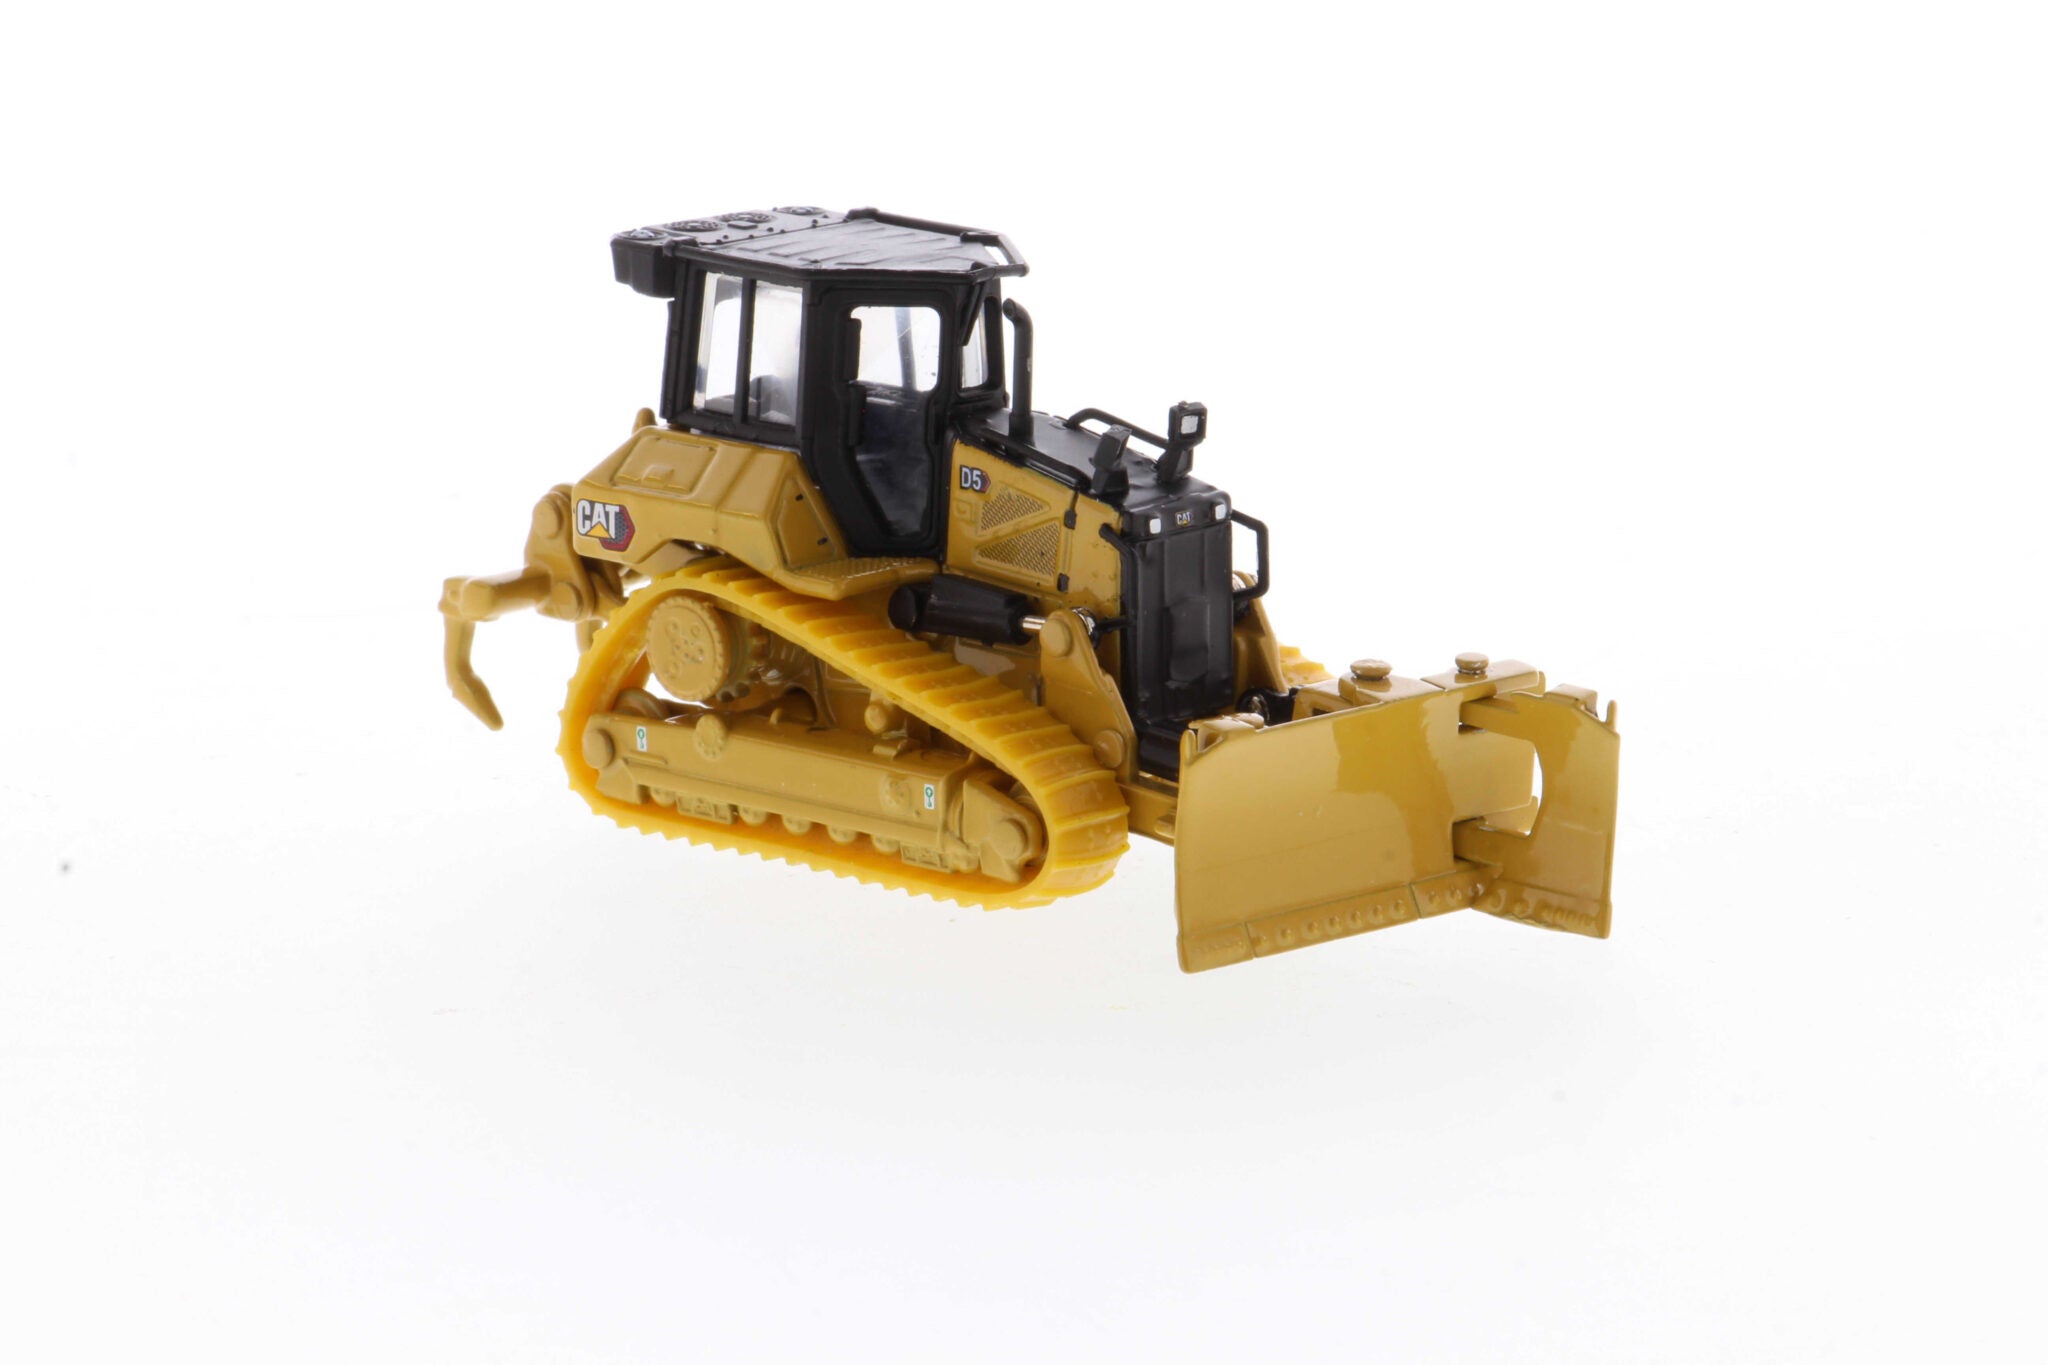 CAT Die Cast D5 LGP Track-Type Tractor 1:87